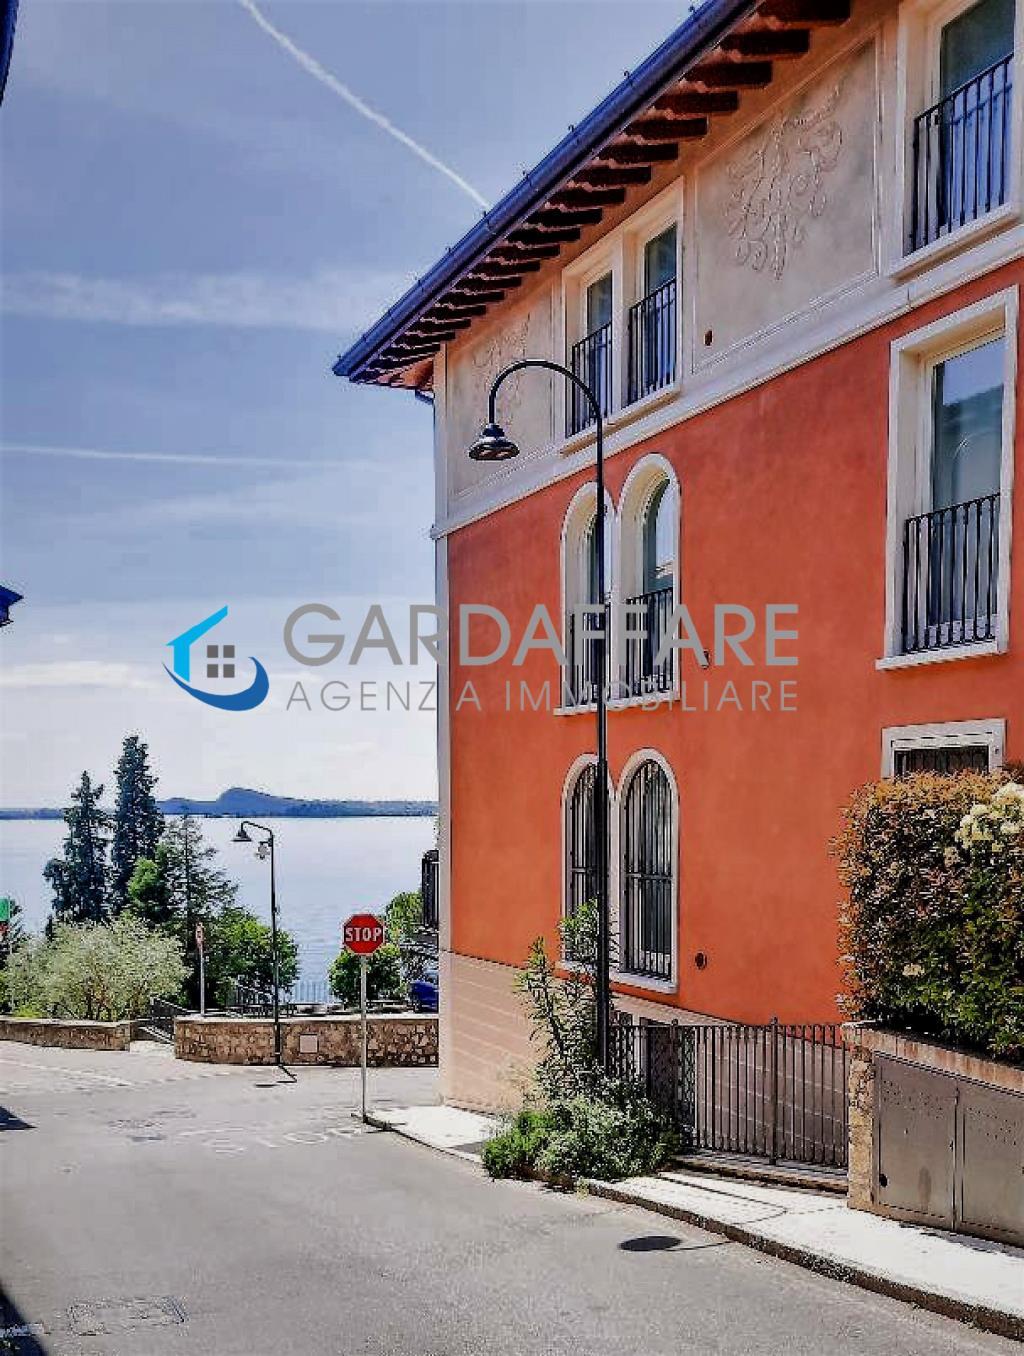 Flat Luxury Properties for Buy in Gardone Riviera - Cod. 16-35